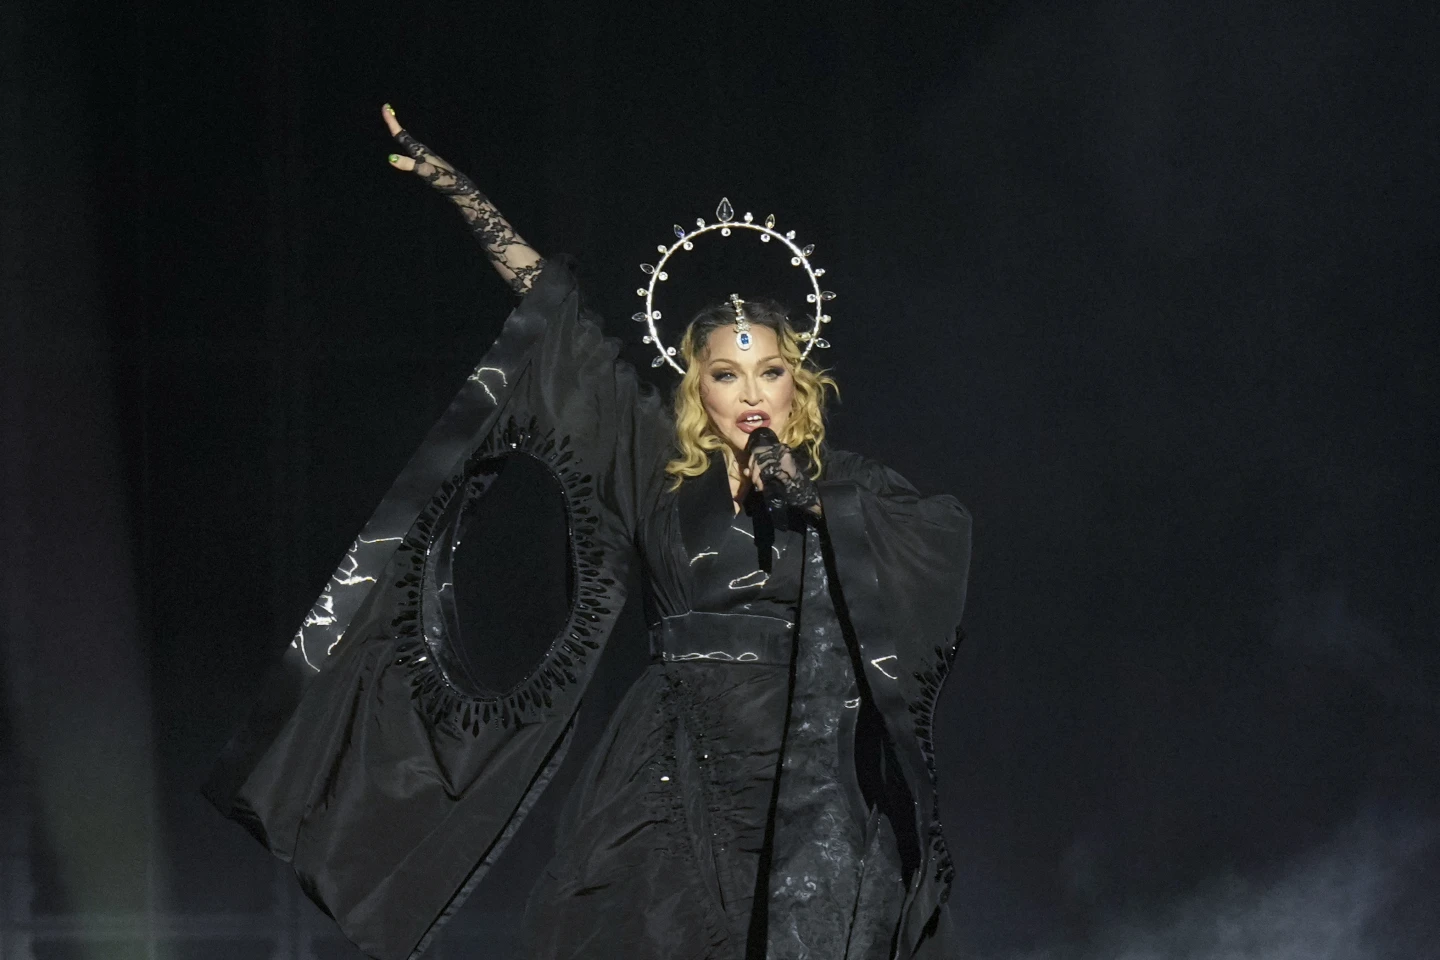 Her Holiness Madonna turns Copacabana beach into giant dance floor 🎵